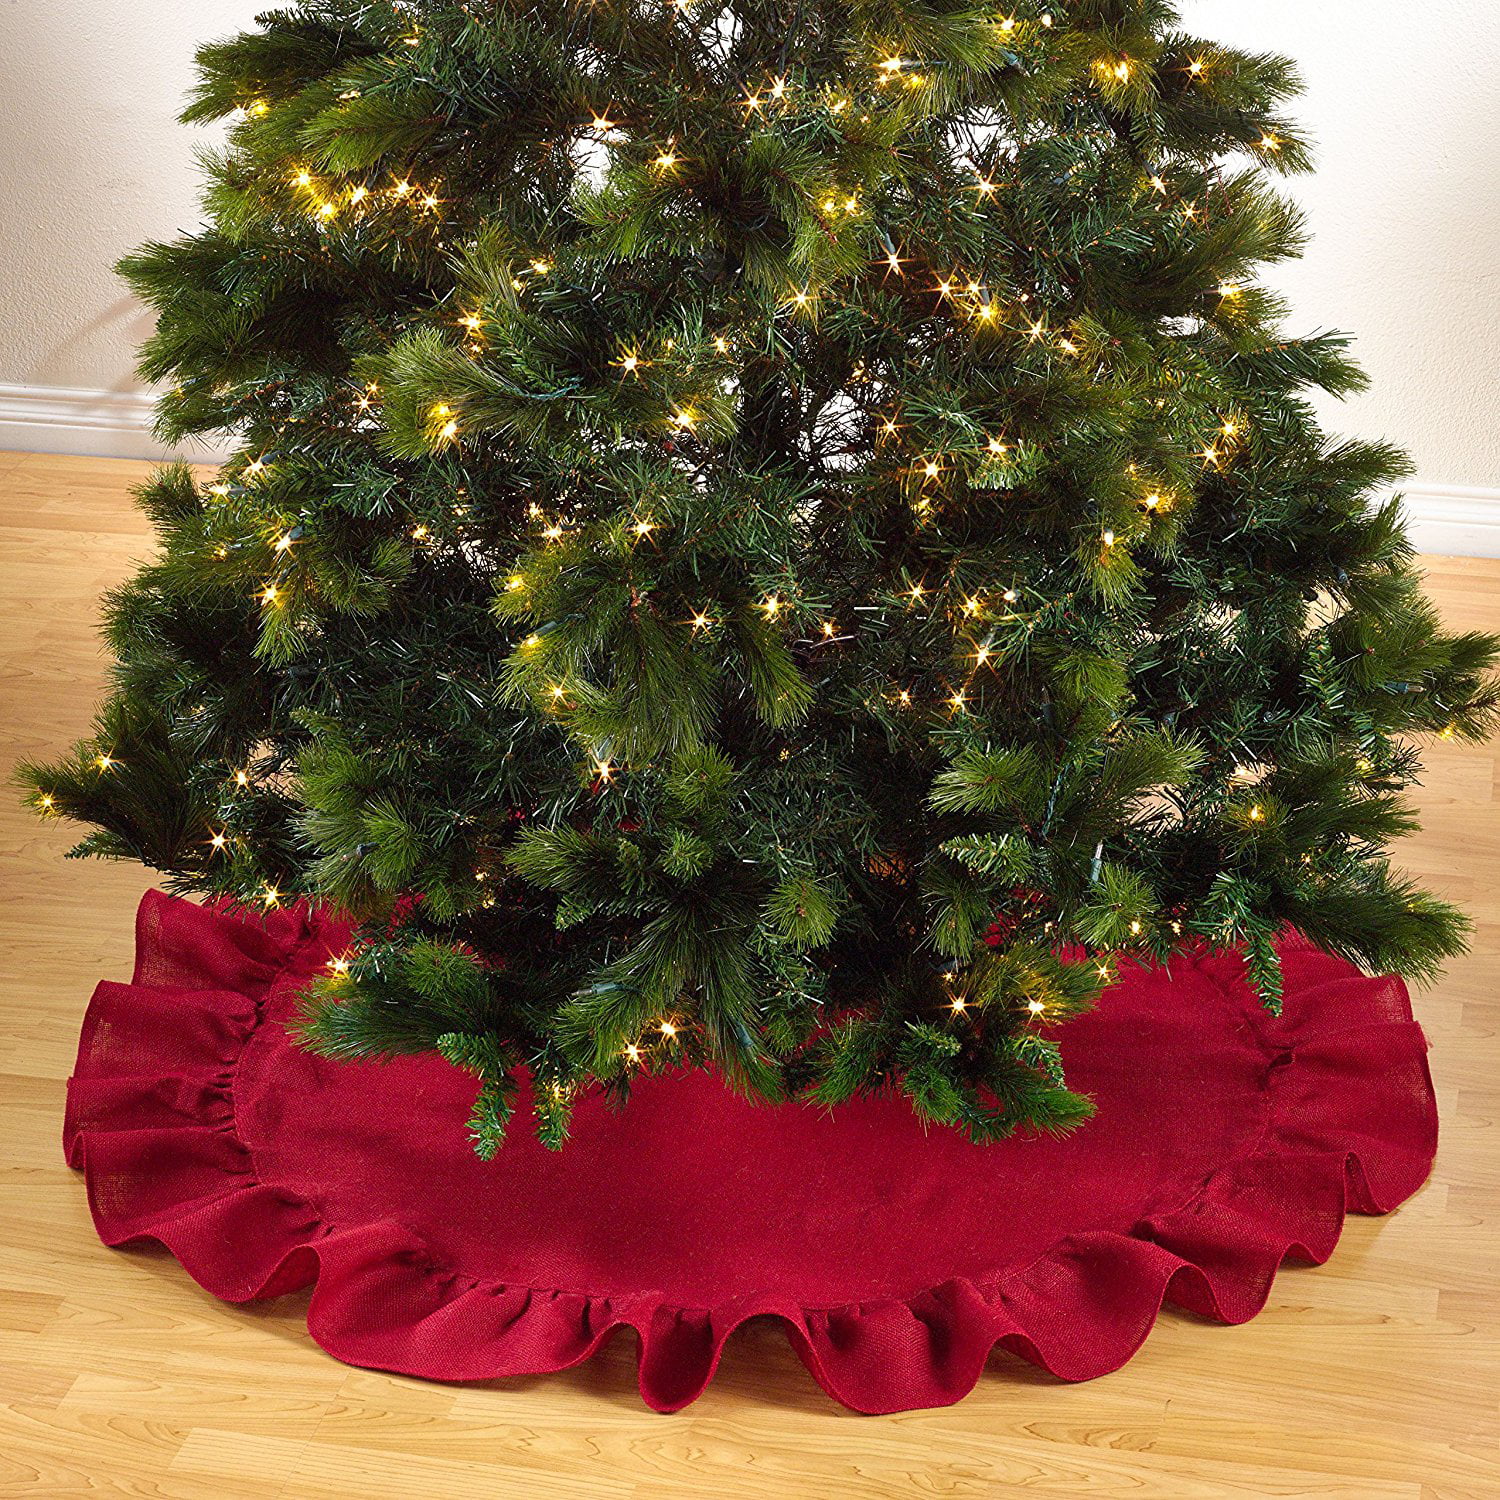 Burlap Santa Ruffled 48" Christmas Tree Skirt VHC Brands NEW